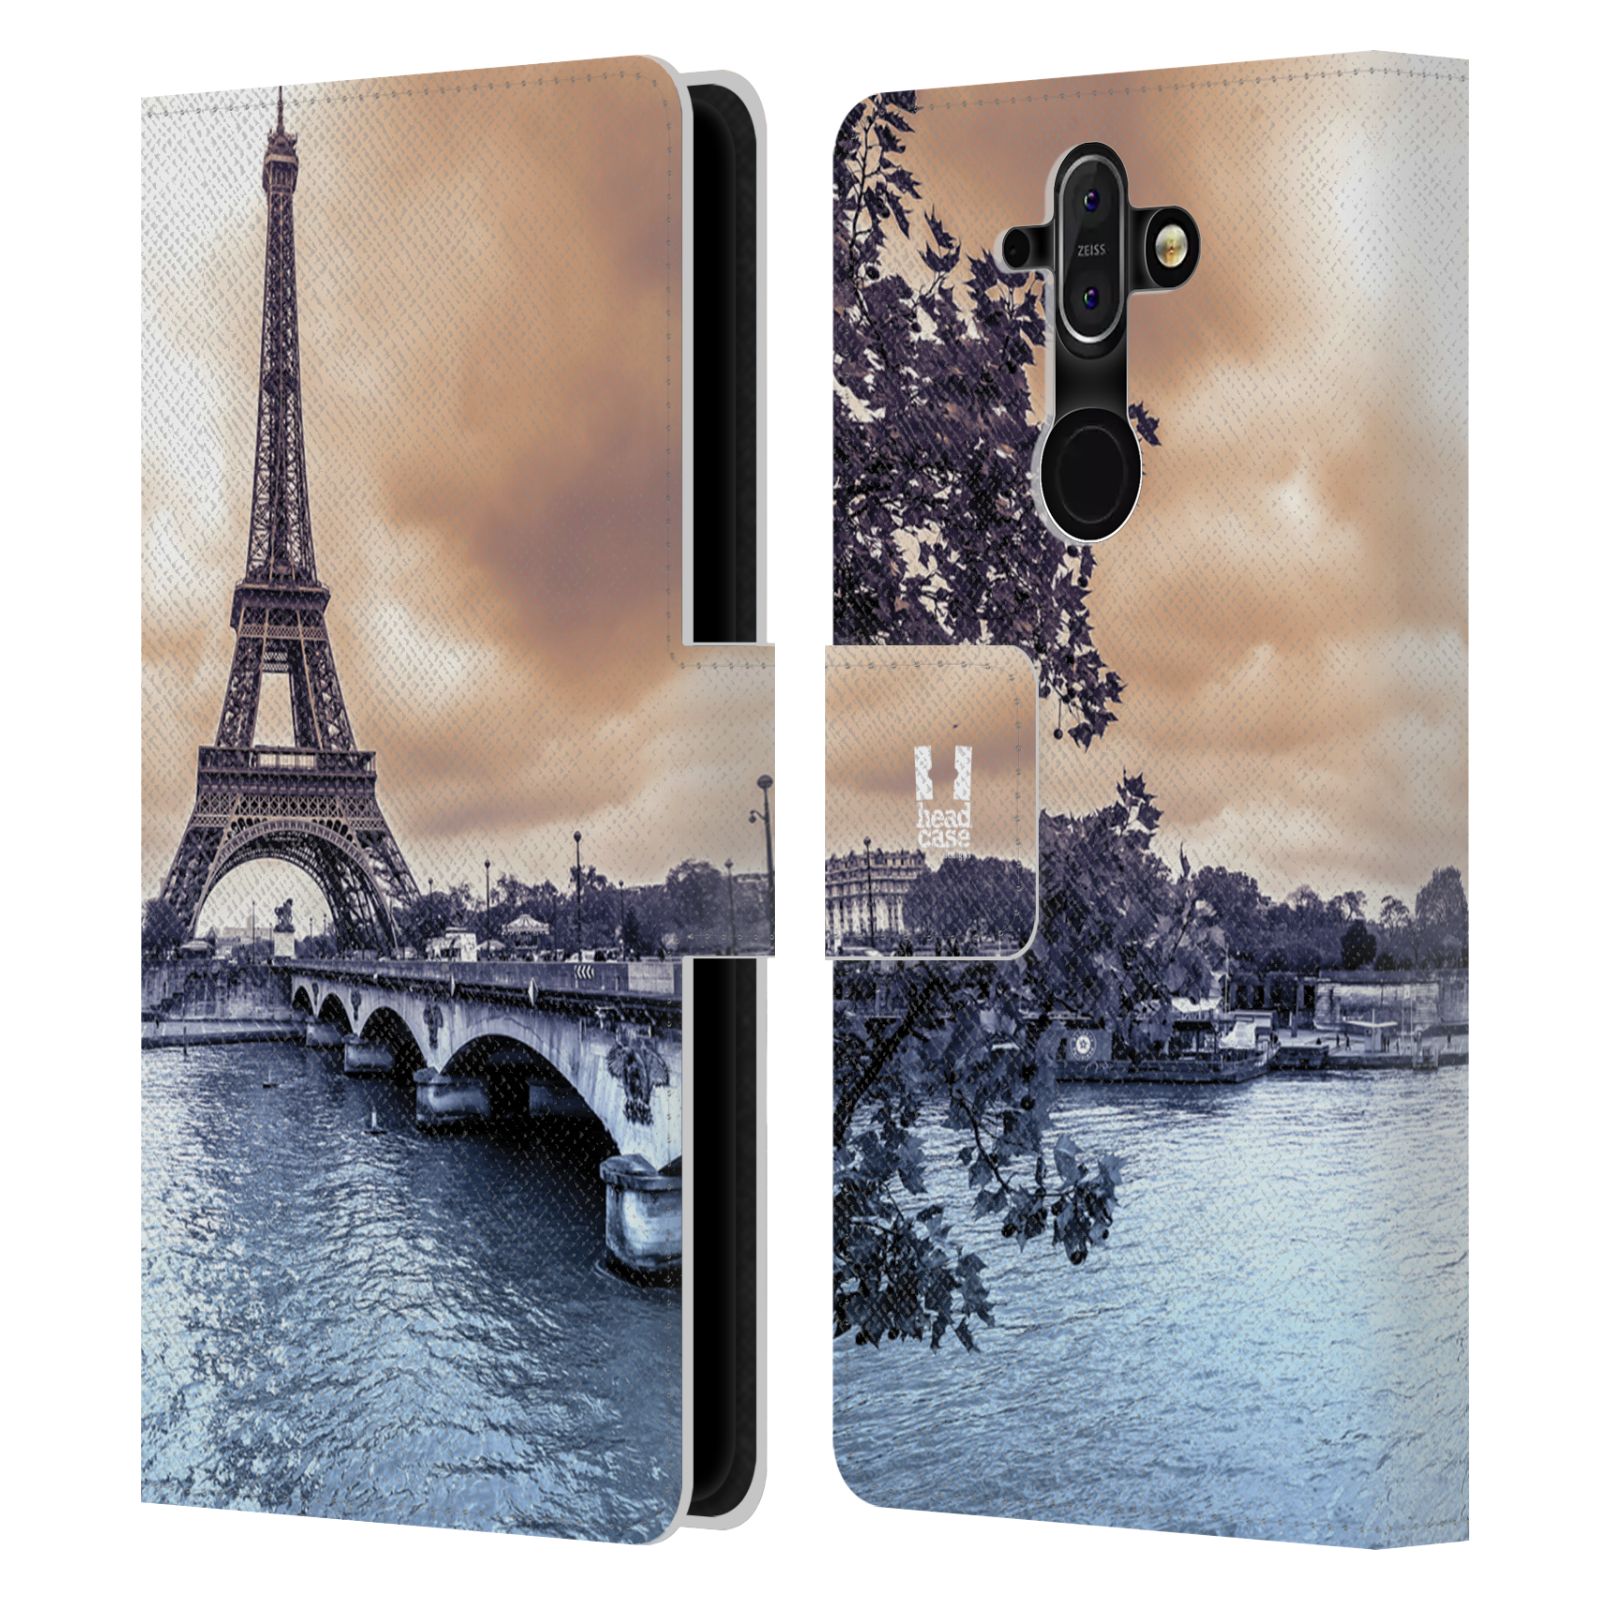 Pouzdro pro mobil Nokia 8 Sirocco - Eiffelova věž Paříž - Francie